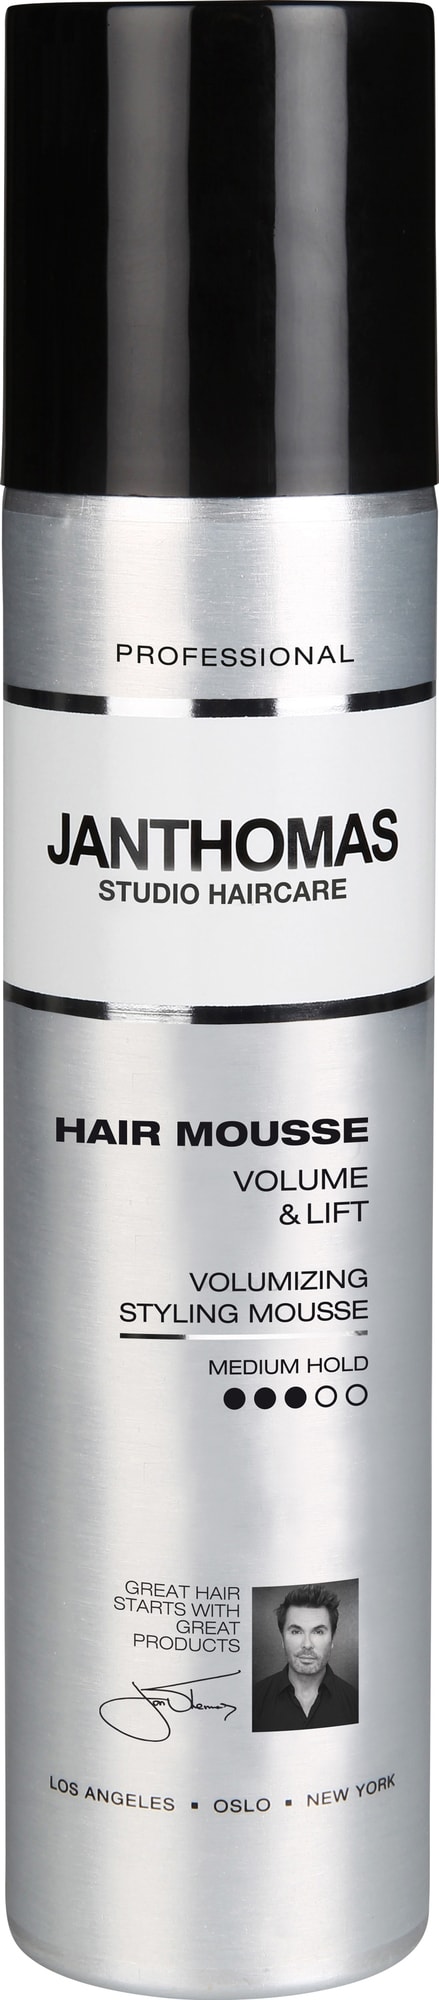 Jan Thomas Volume & Lift hårmousse JT941243